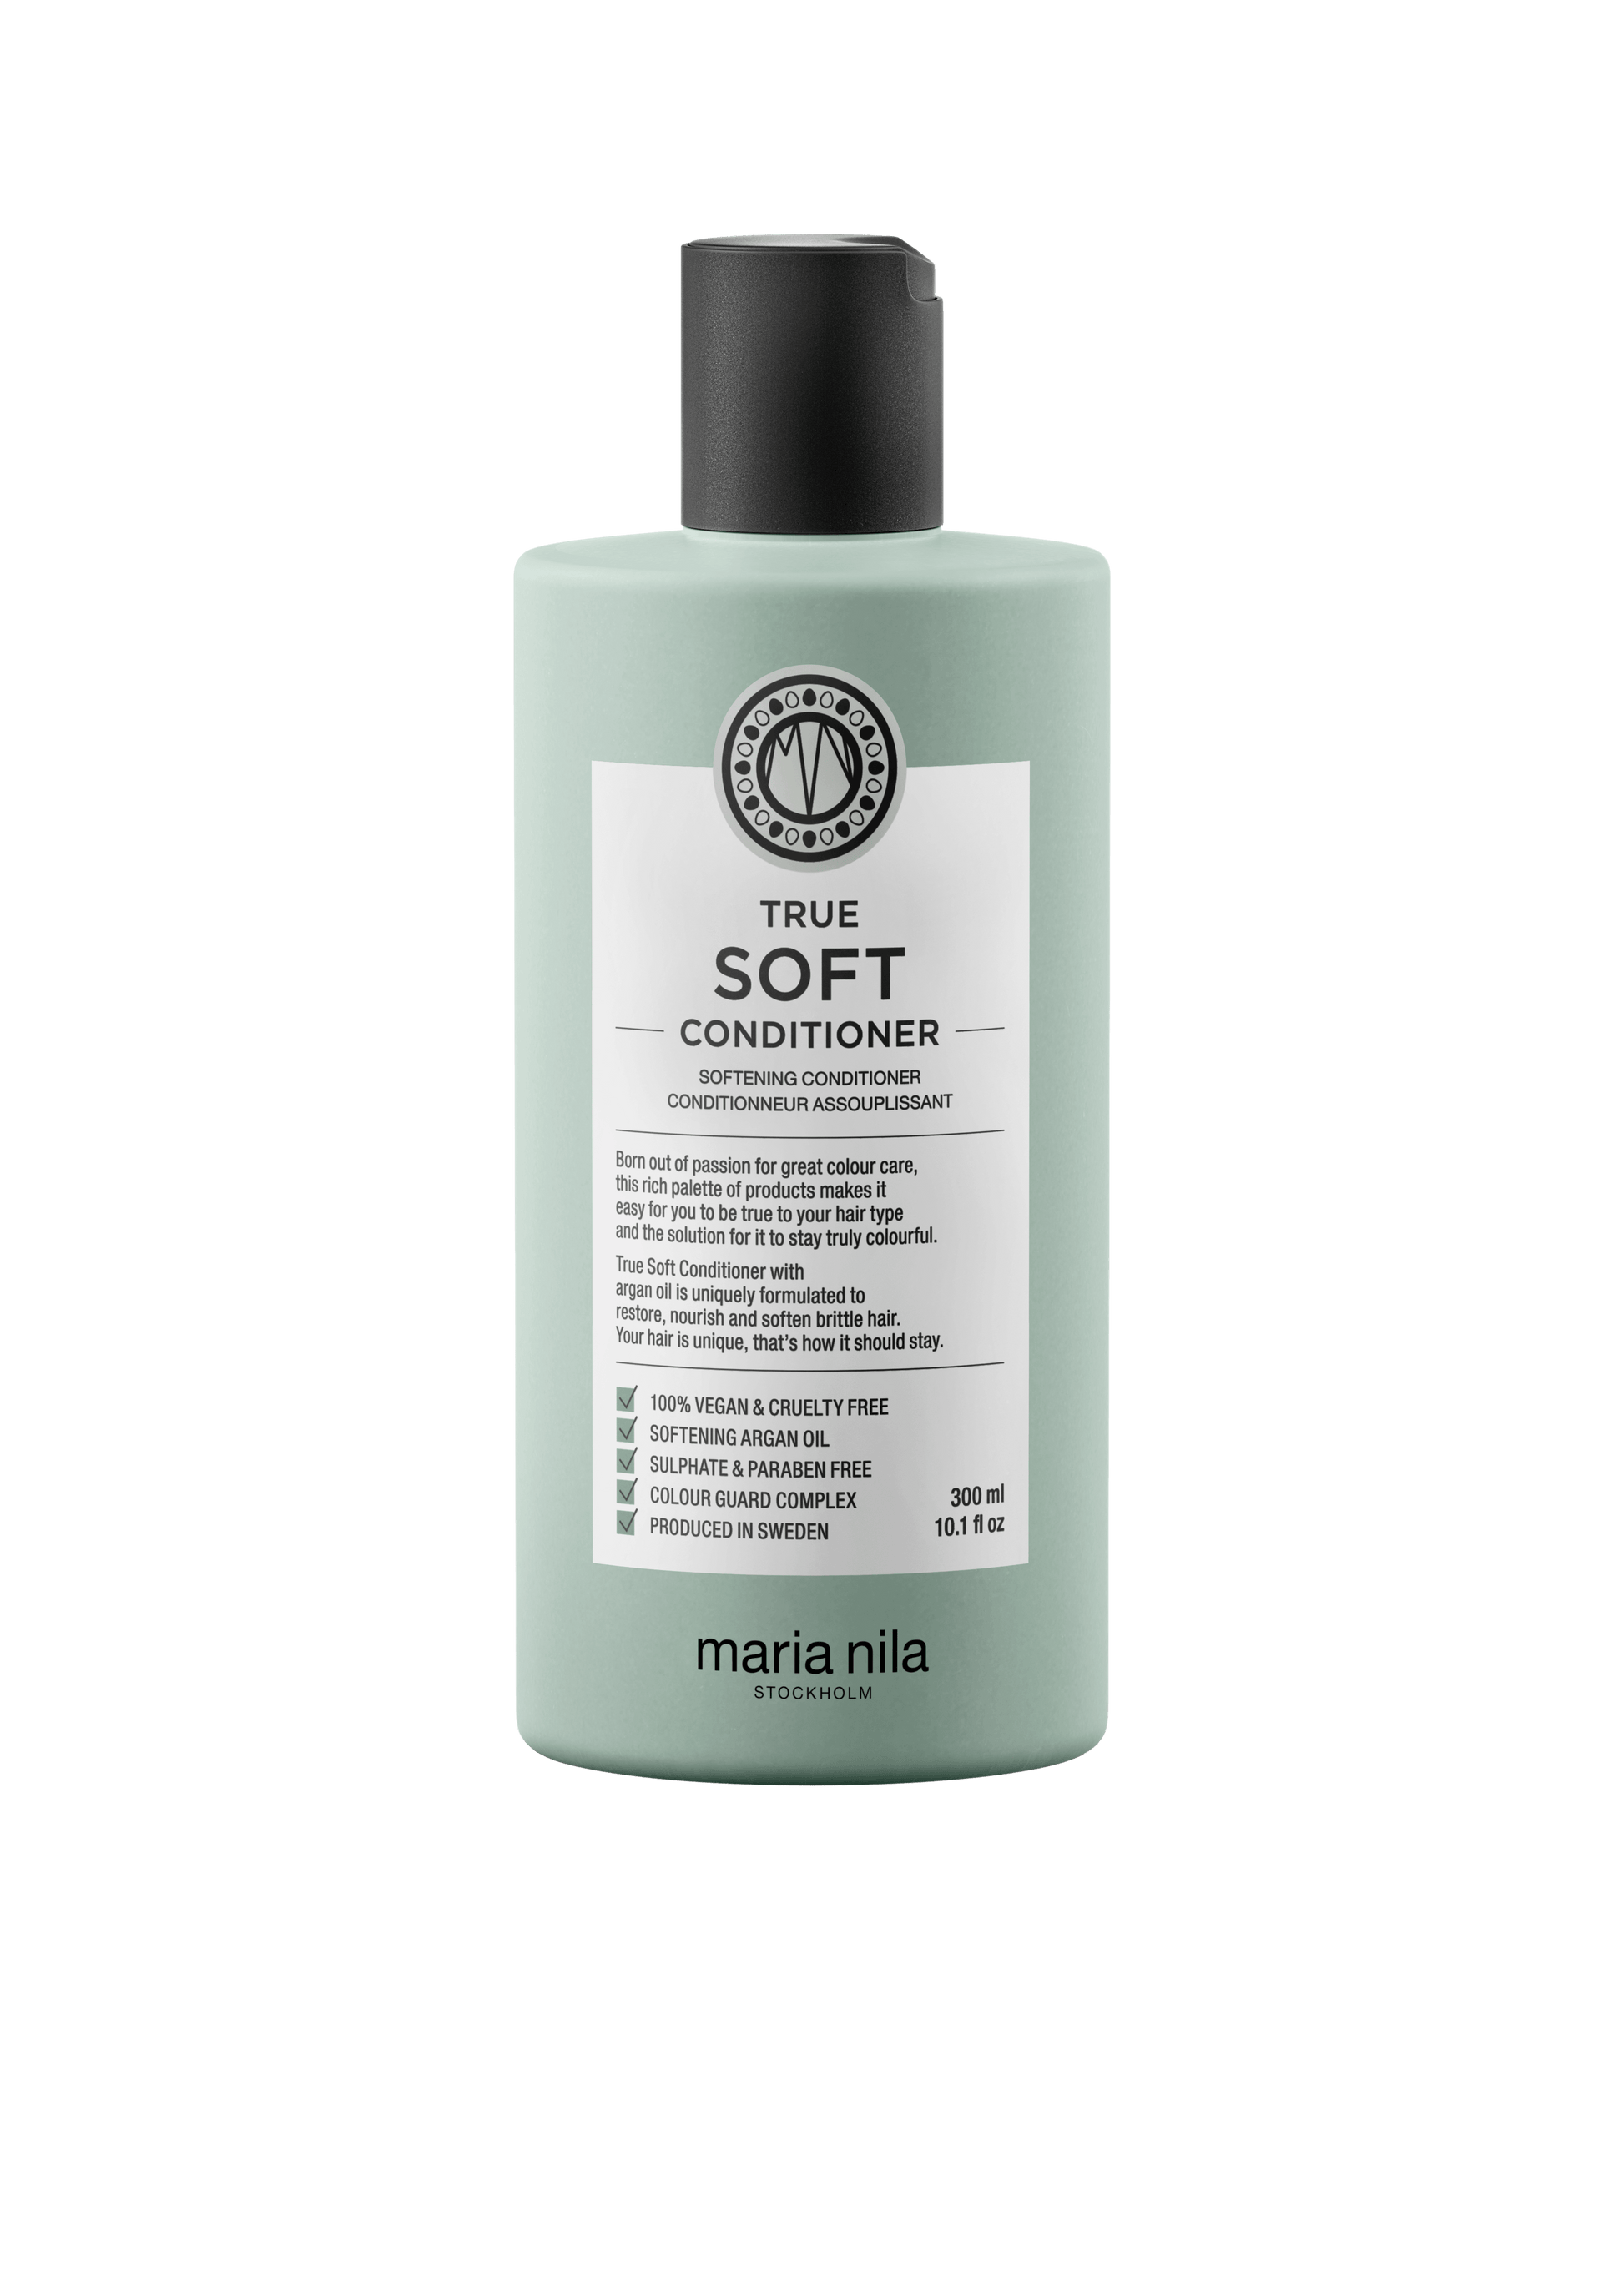 True Soft Conditioner - The Coloroom 